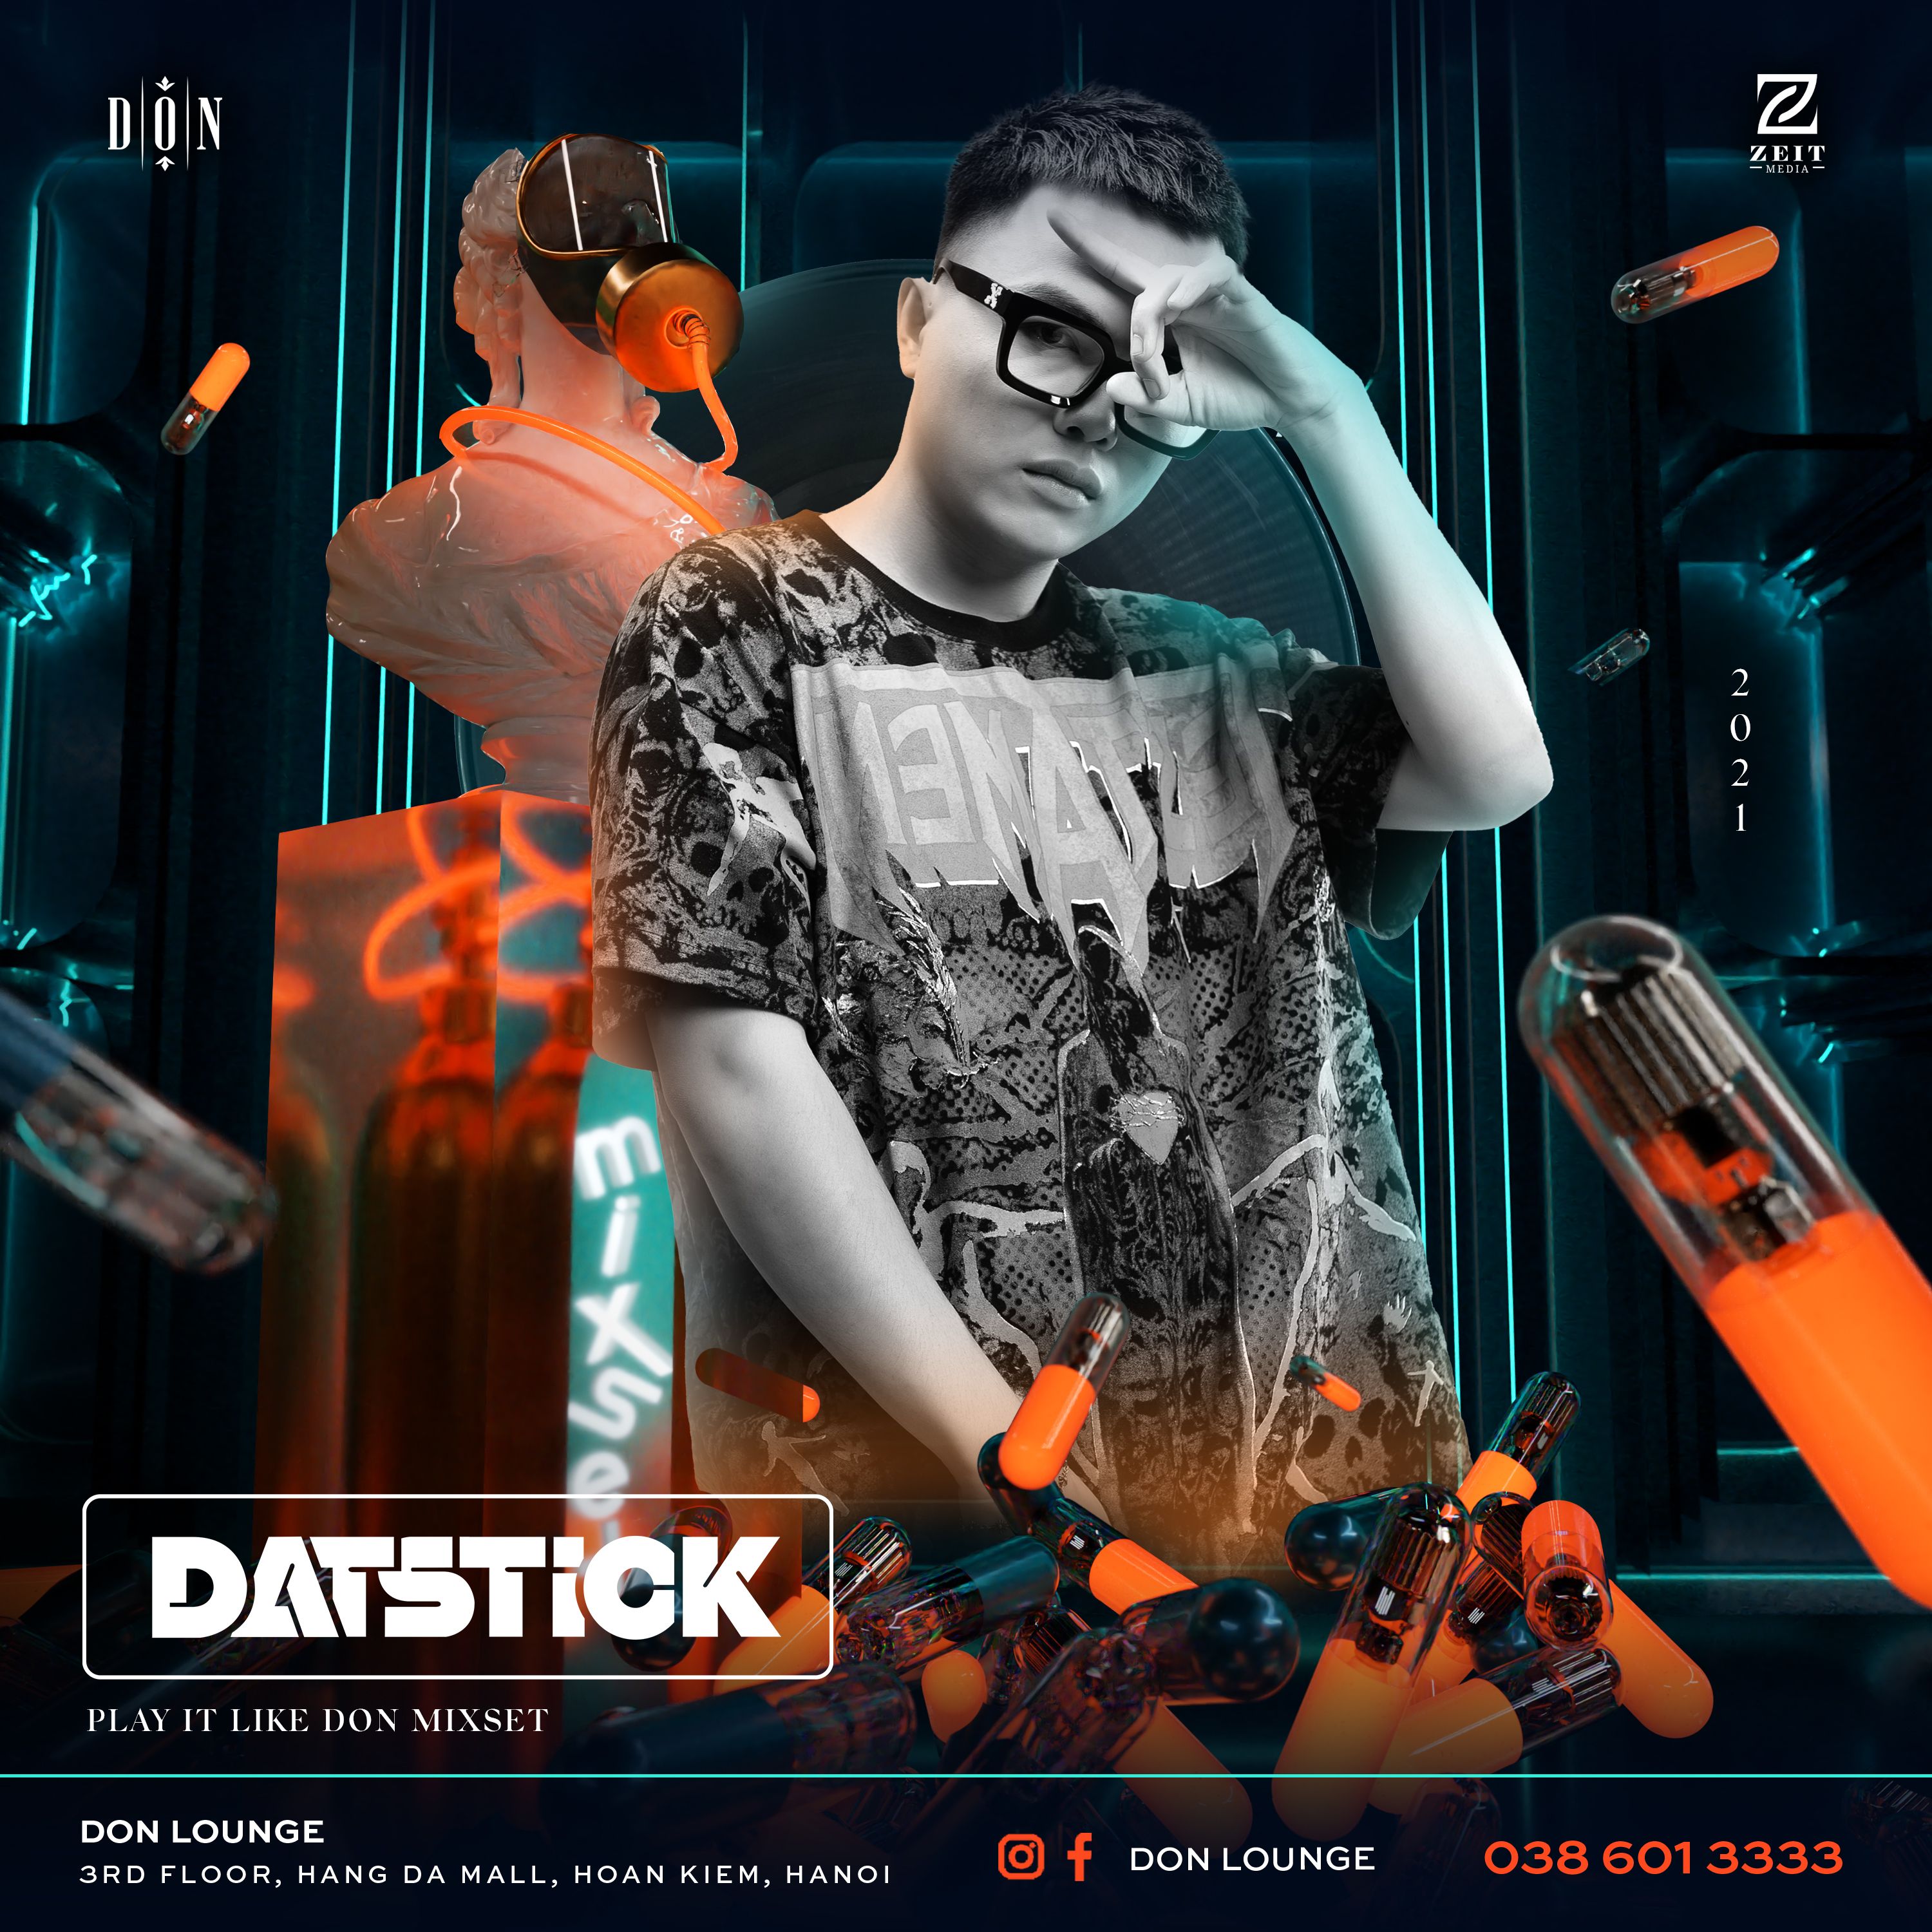 Descargar DON MIXSET || KEEP ROLLIN’ ON - DJ DATSTICK